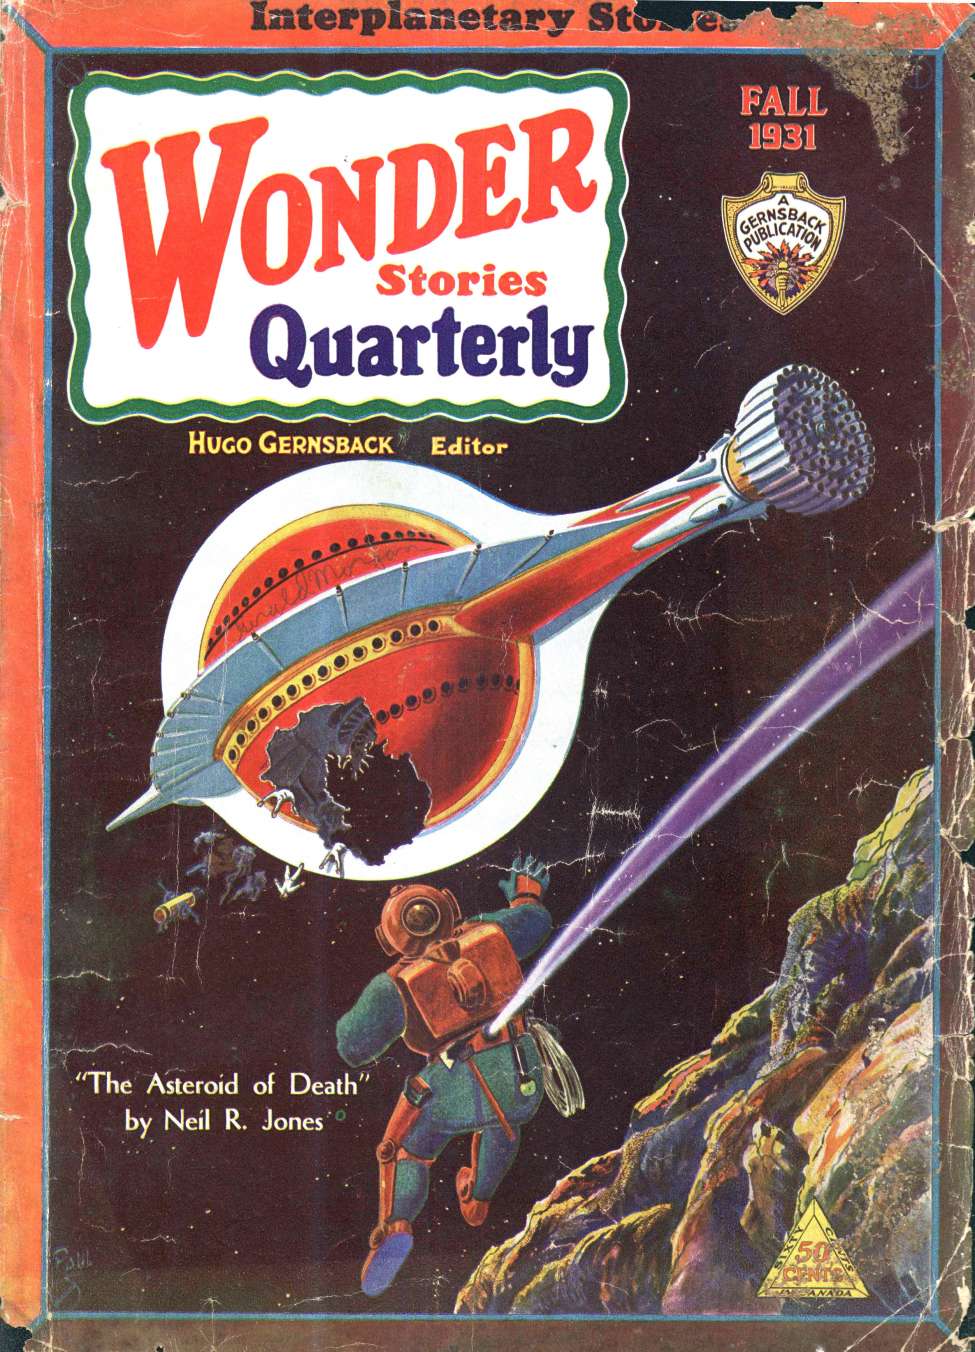 Comic Book Cover For Wonder Stories Quarterly v3 1 - The Cosmic Cloud - Bruno H. Burgel